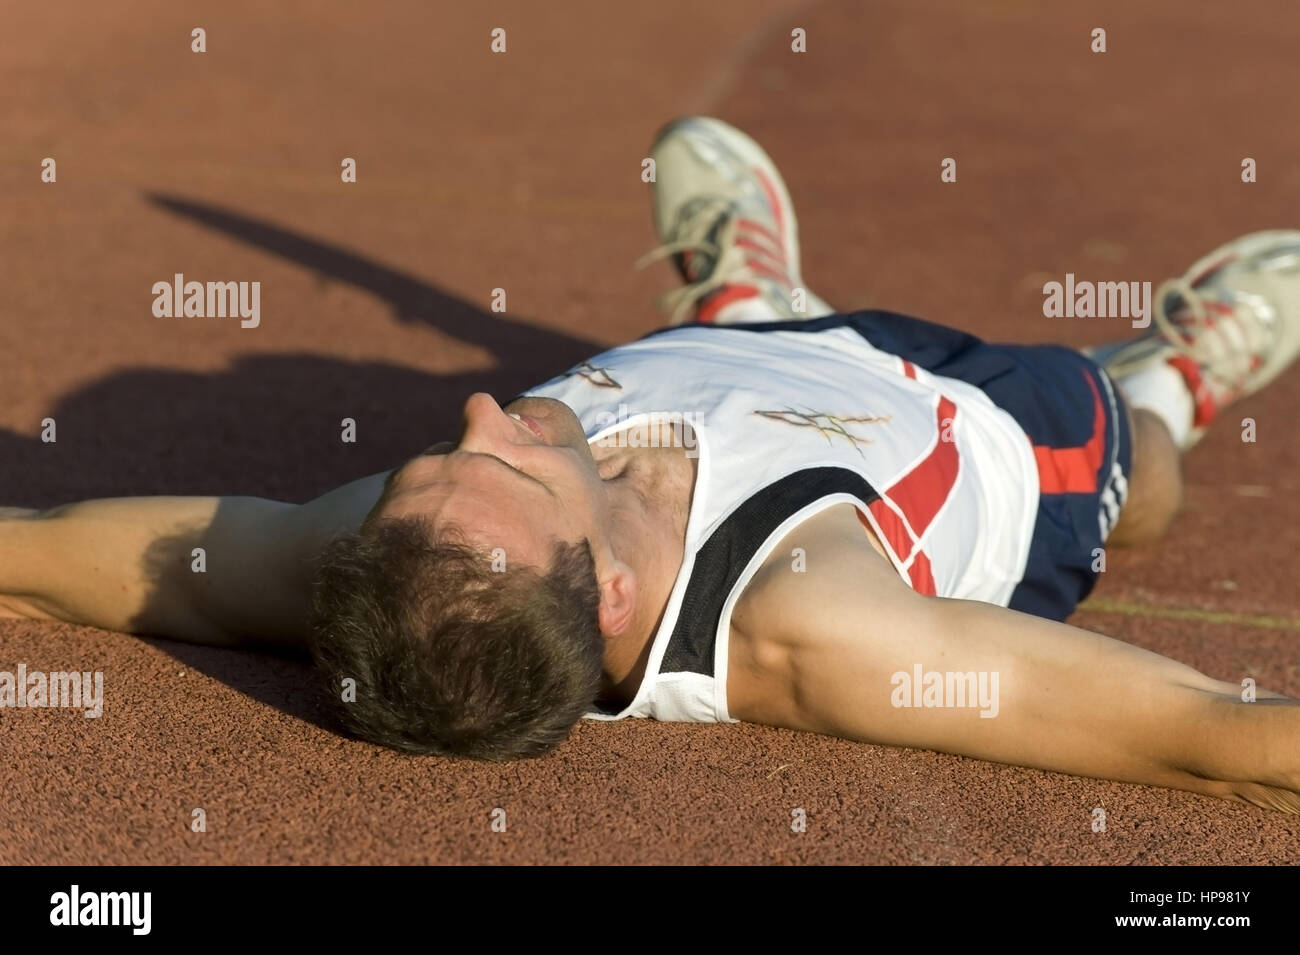 Model released , Sportler liegt erschoepft auf der Laufbahn - exhausted sportsman lying on ground Stock Photo